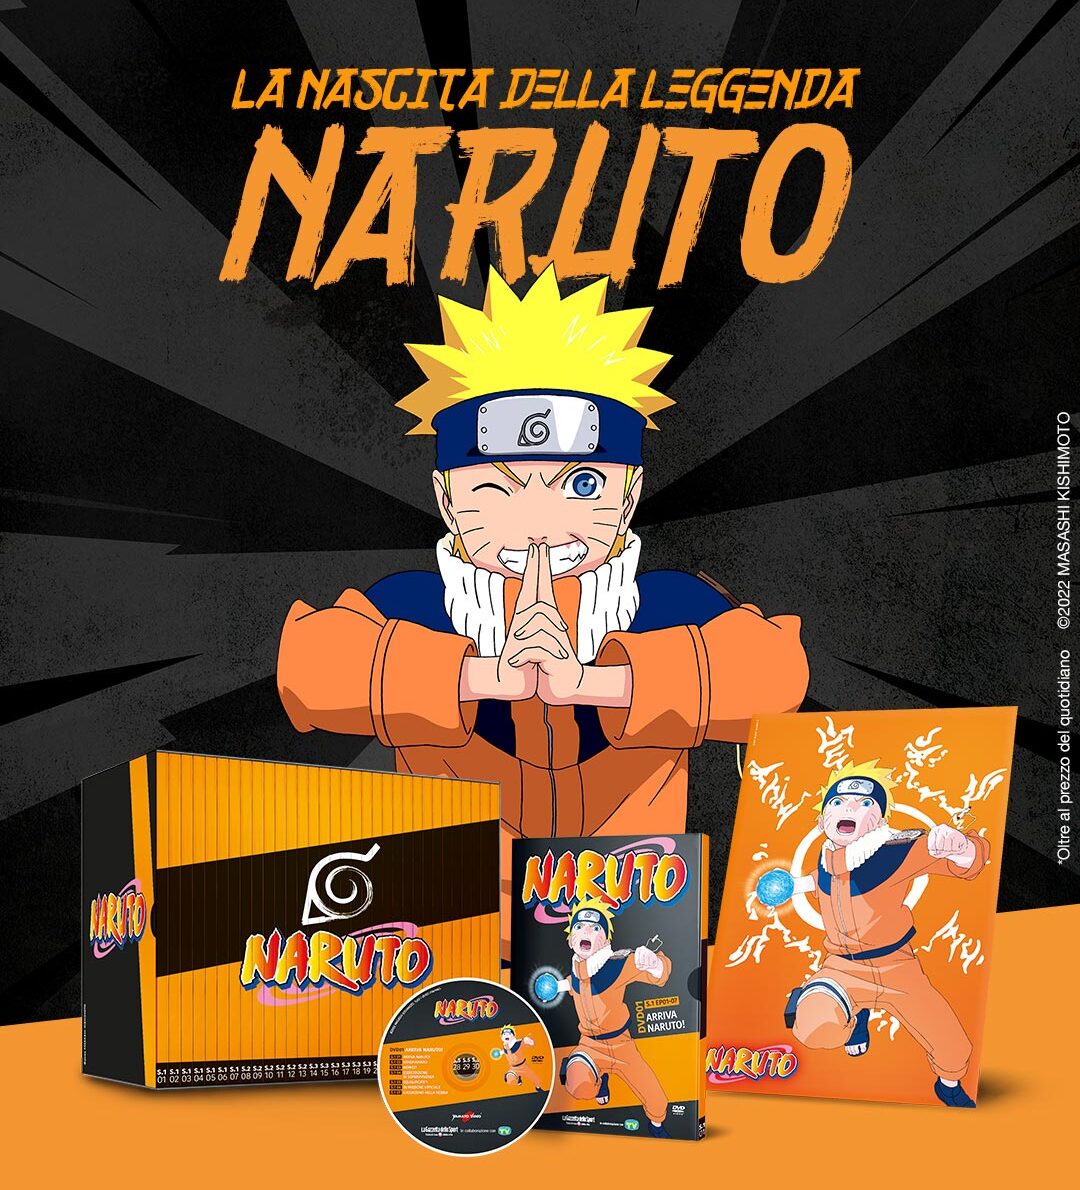 Naruto. La Nascita della leggenda